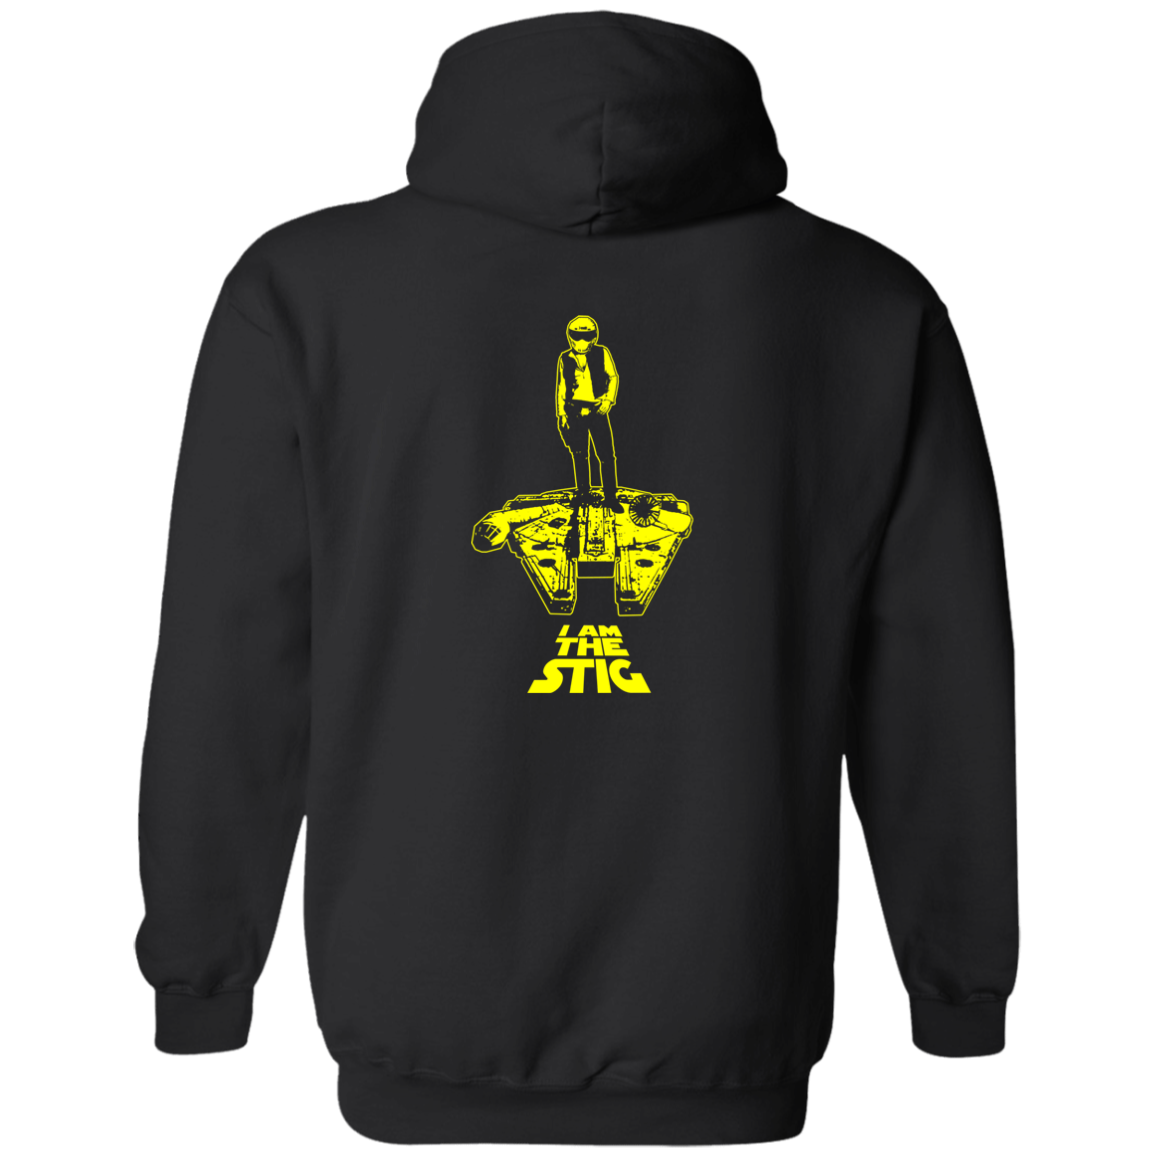 ArtichokeUSA Custom Design. I am the Stig. Han Solo / The Stig Fan Art. Zip Up Hooded Sweatshirt